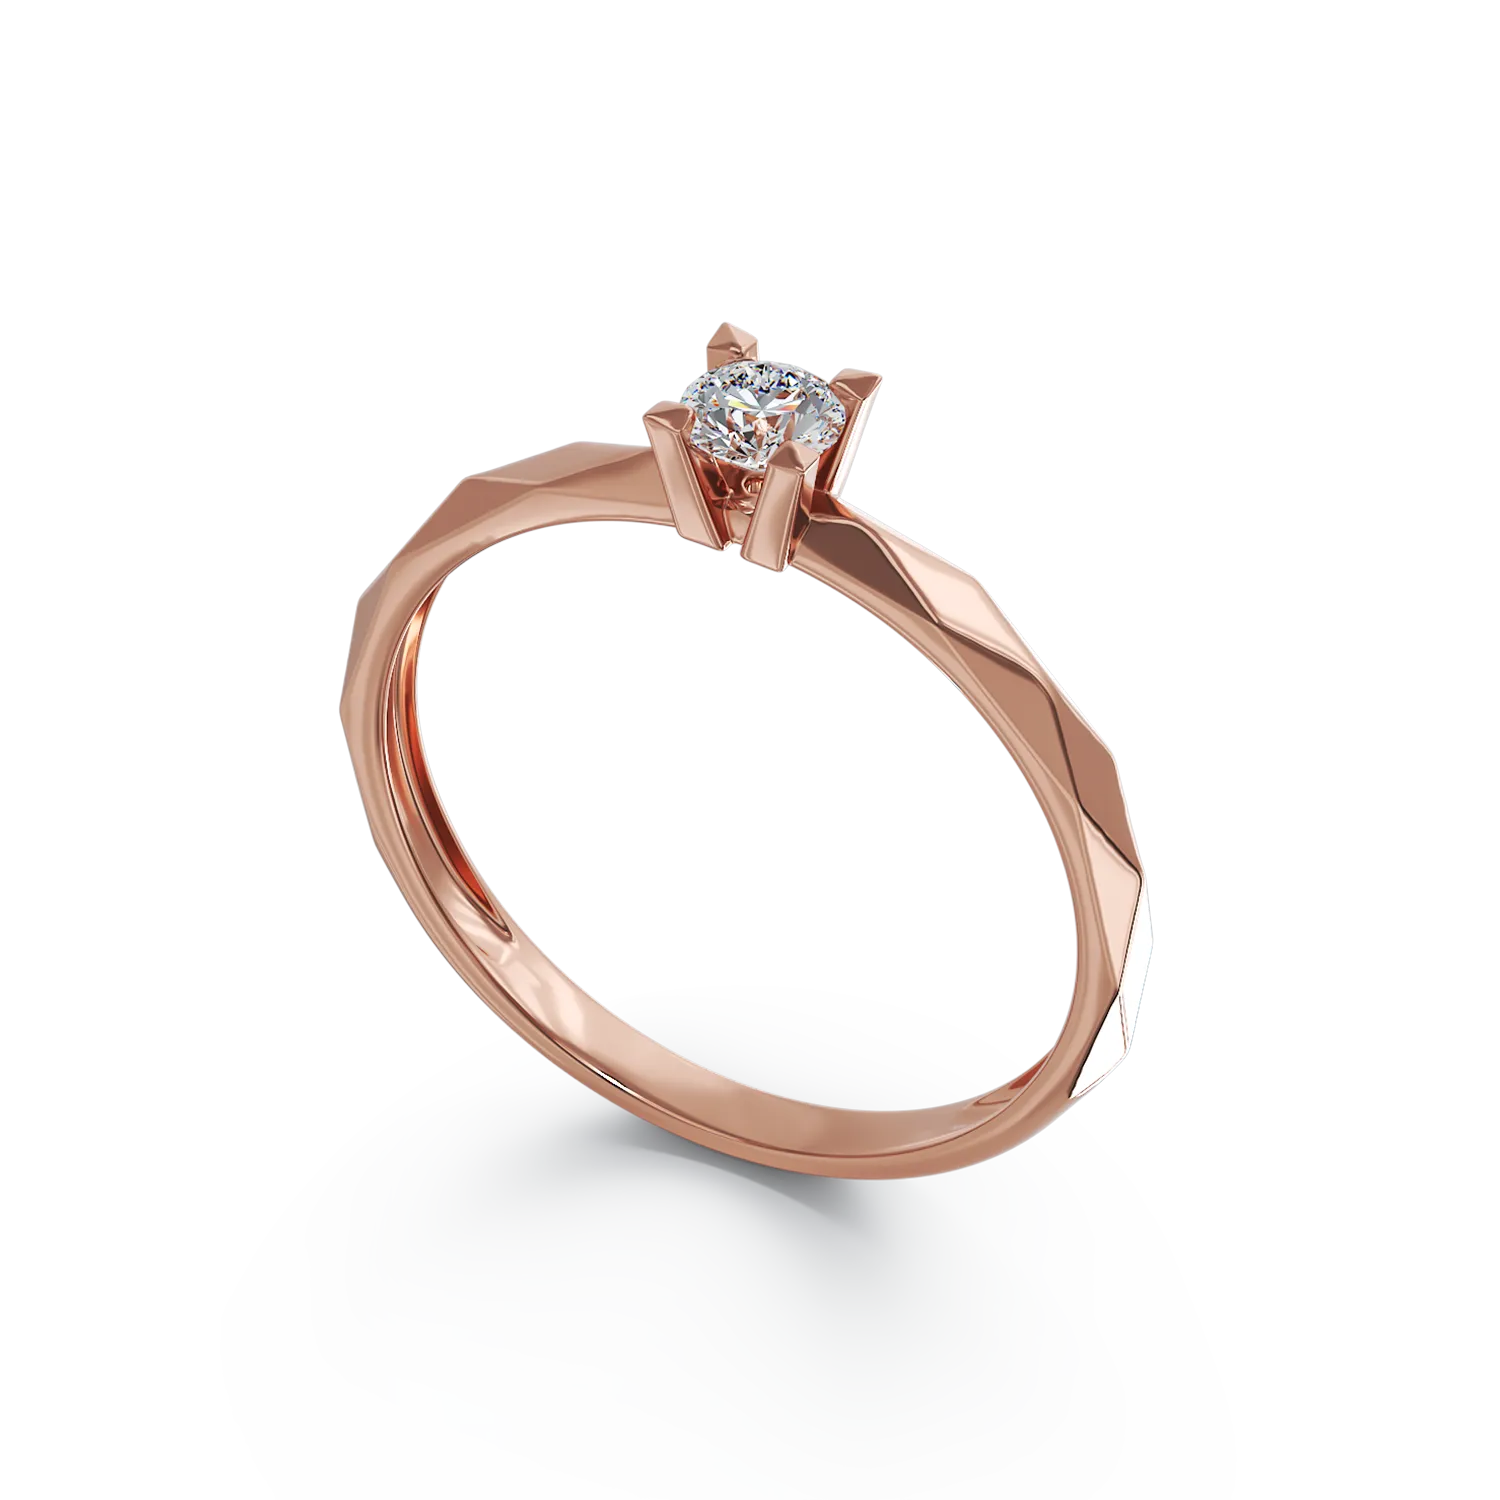 14K rose gold engagement ring